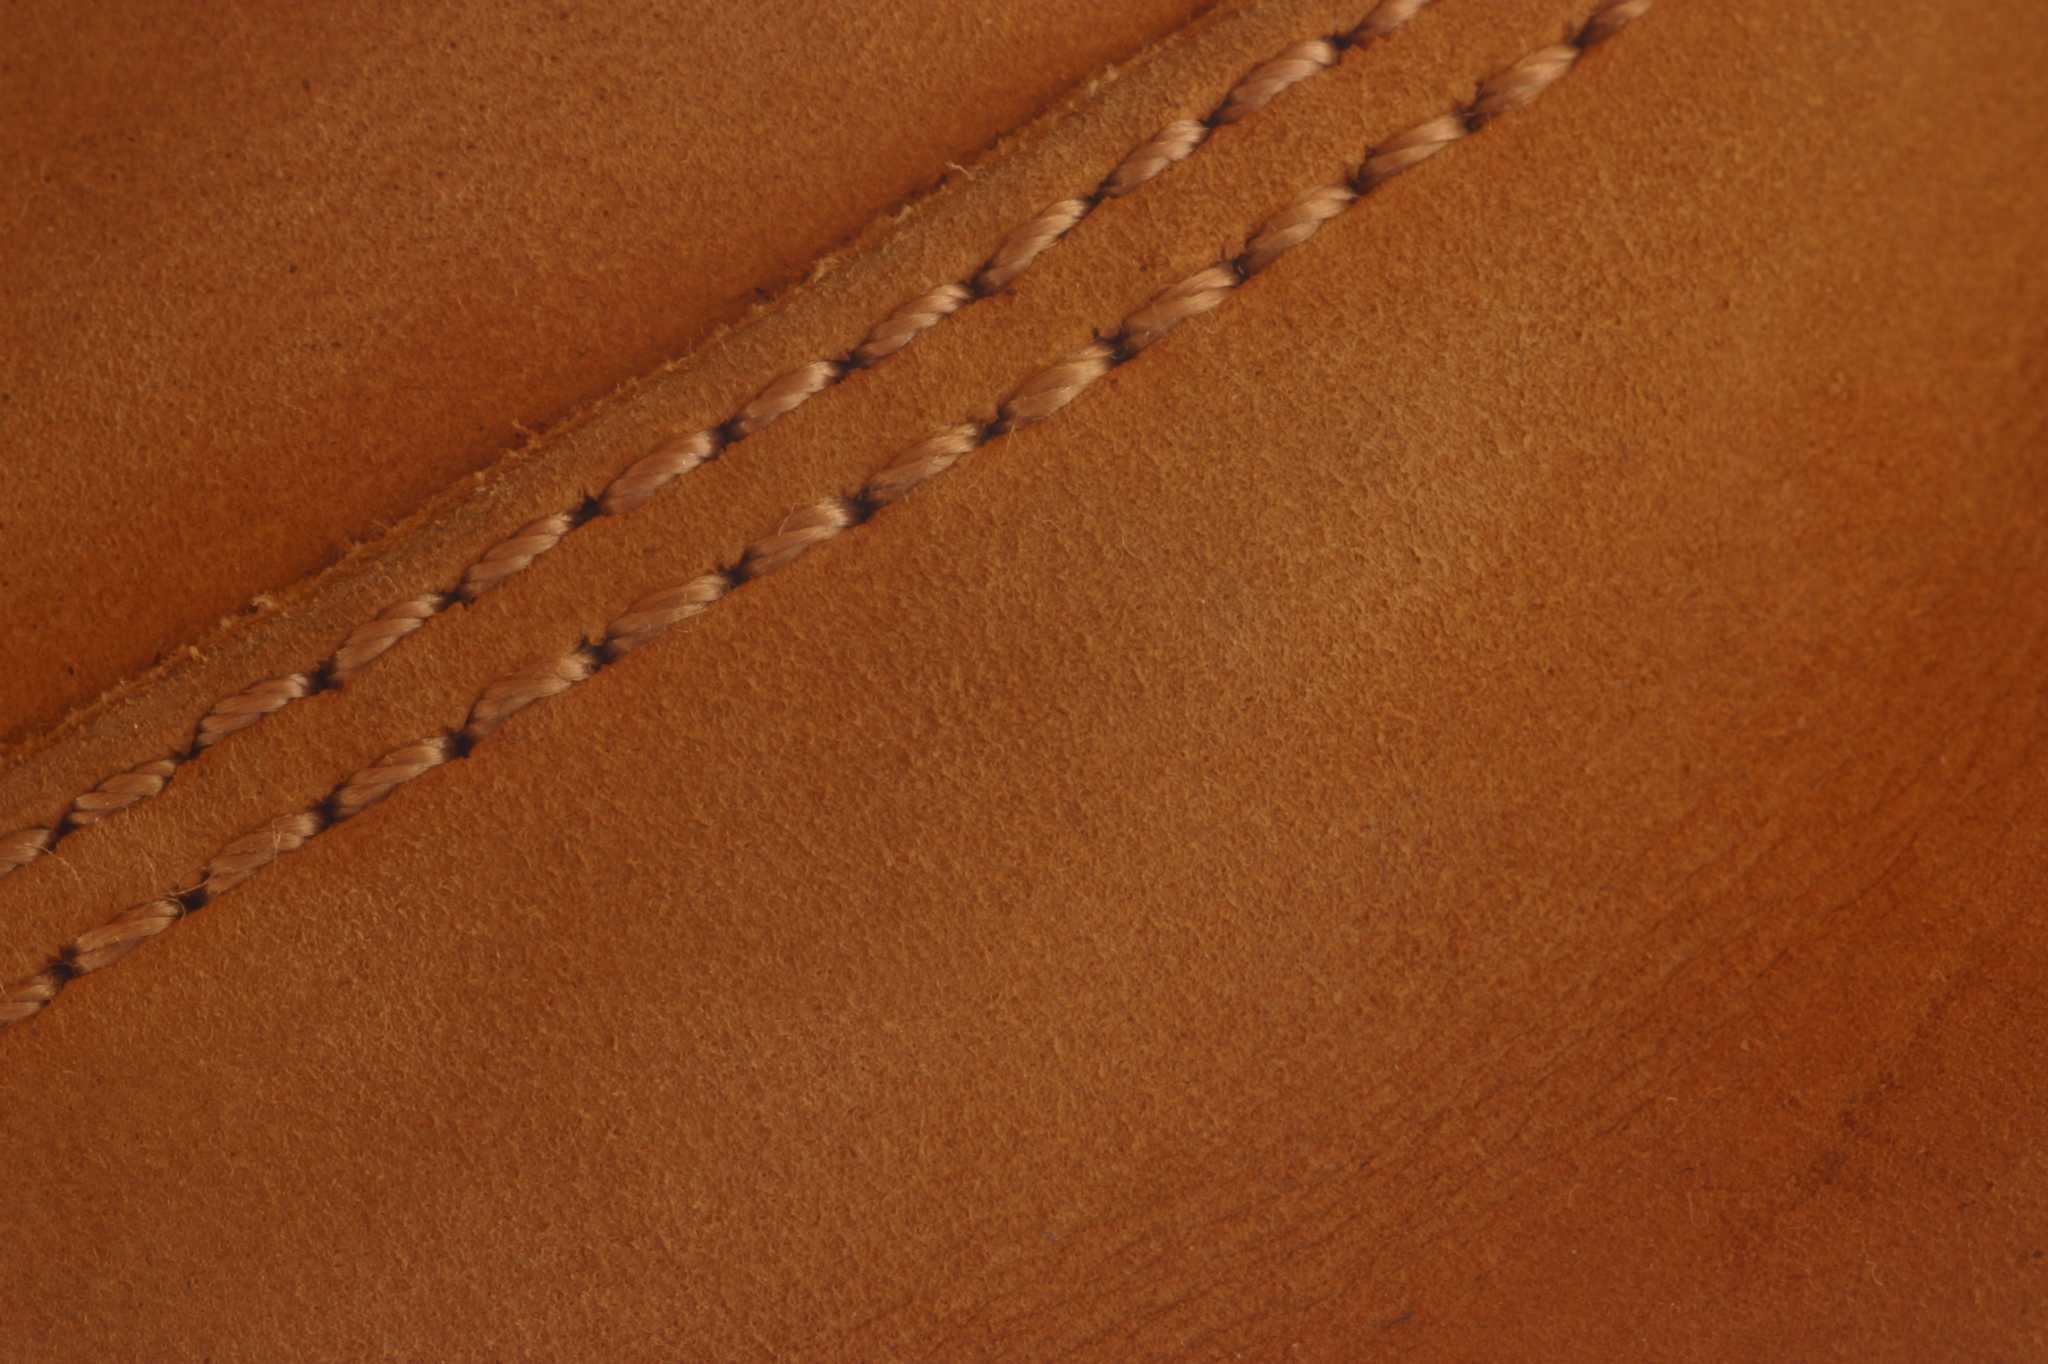 Troubleshooting the Sandpaper-Super-Glue Technique of Leather Repair